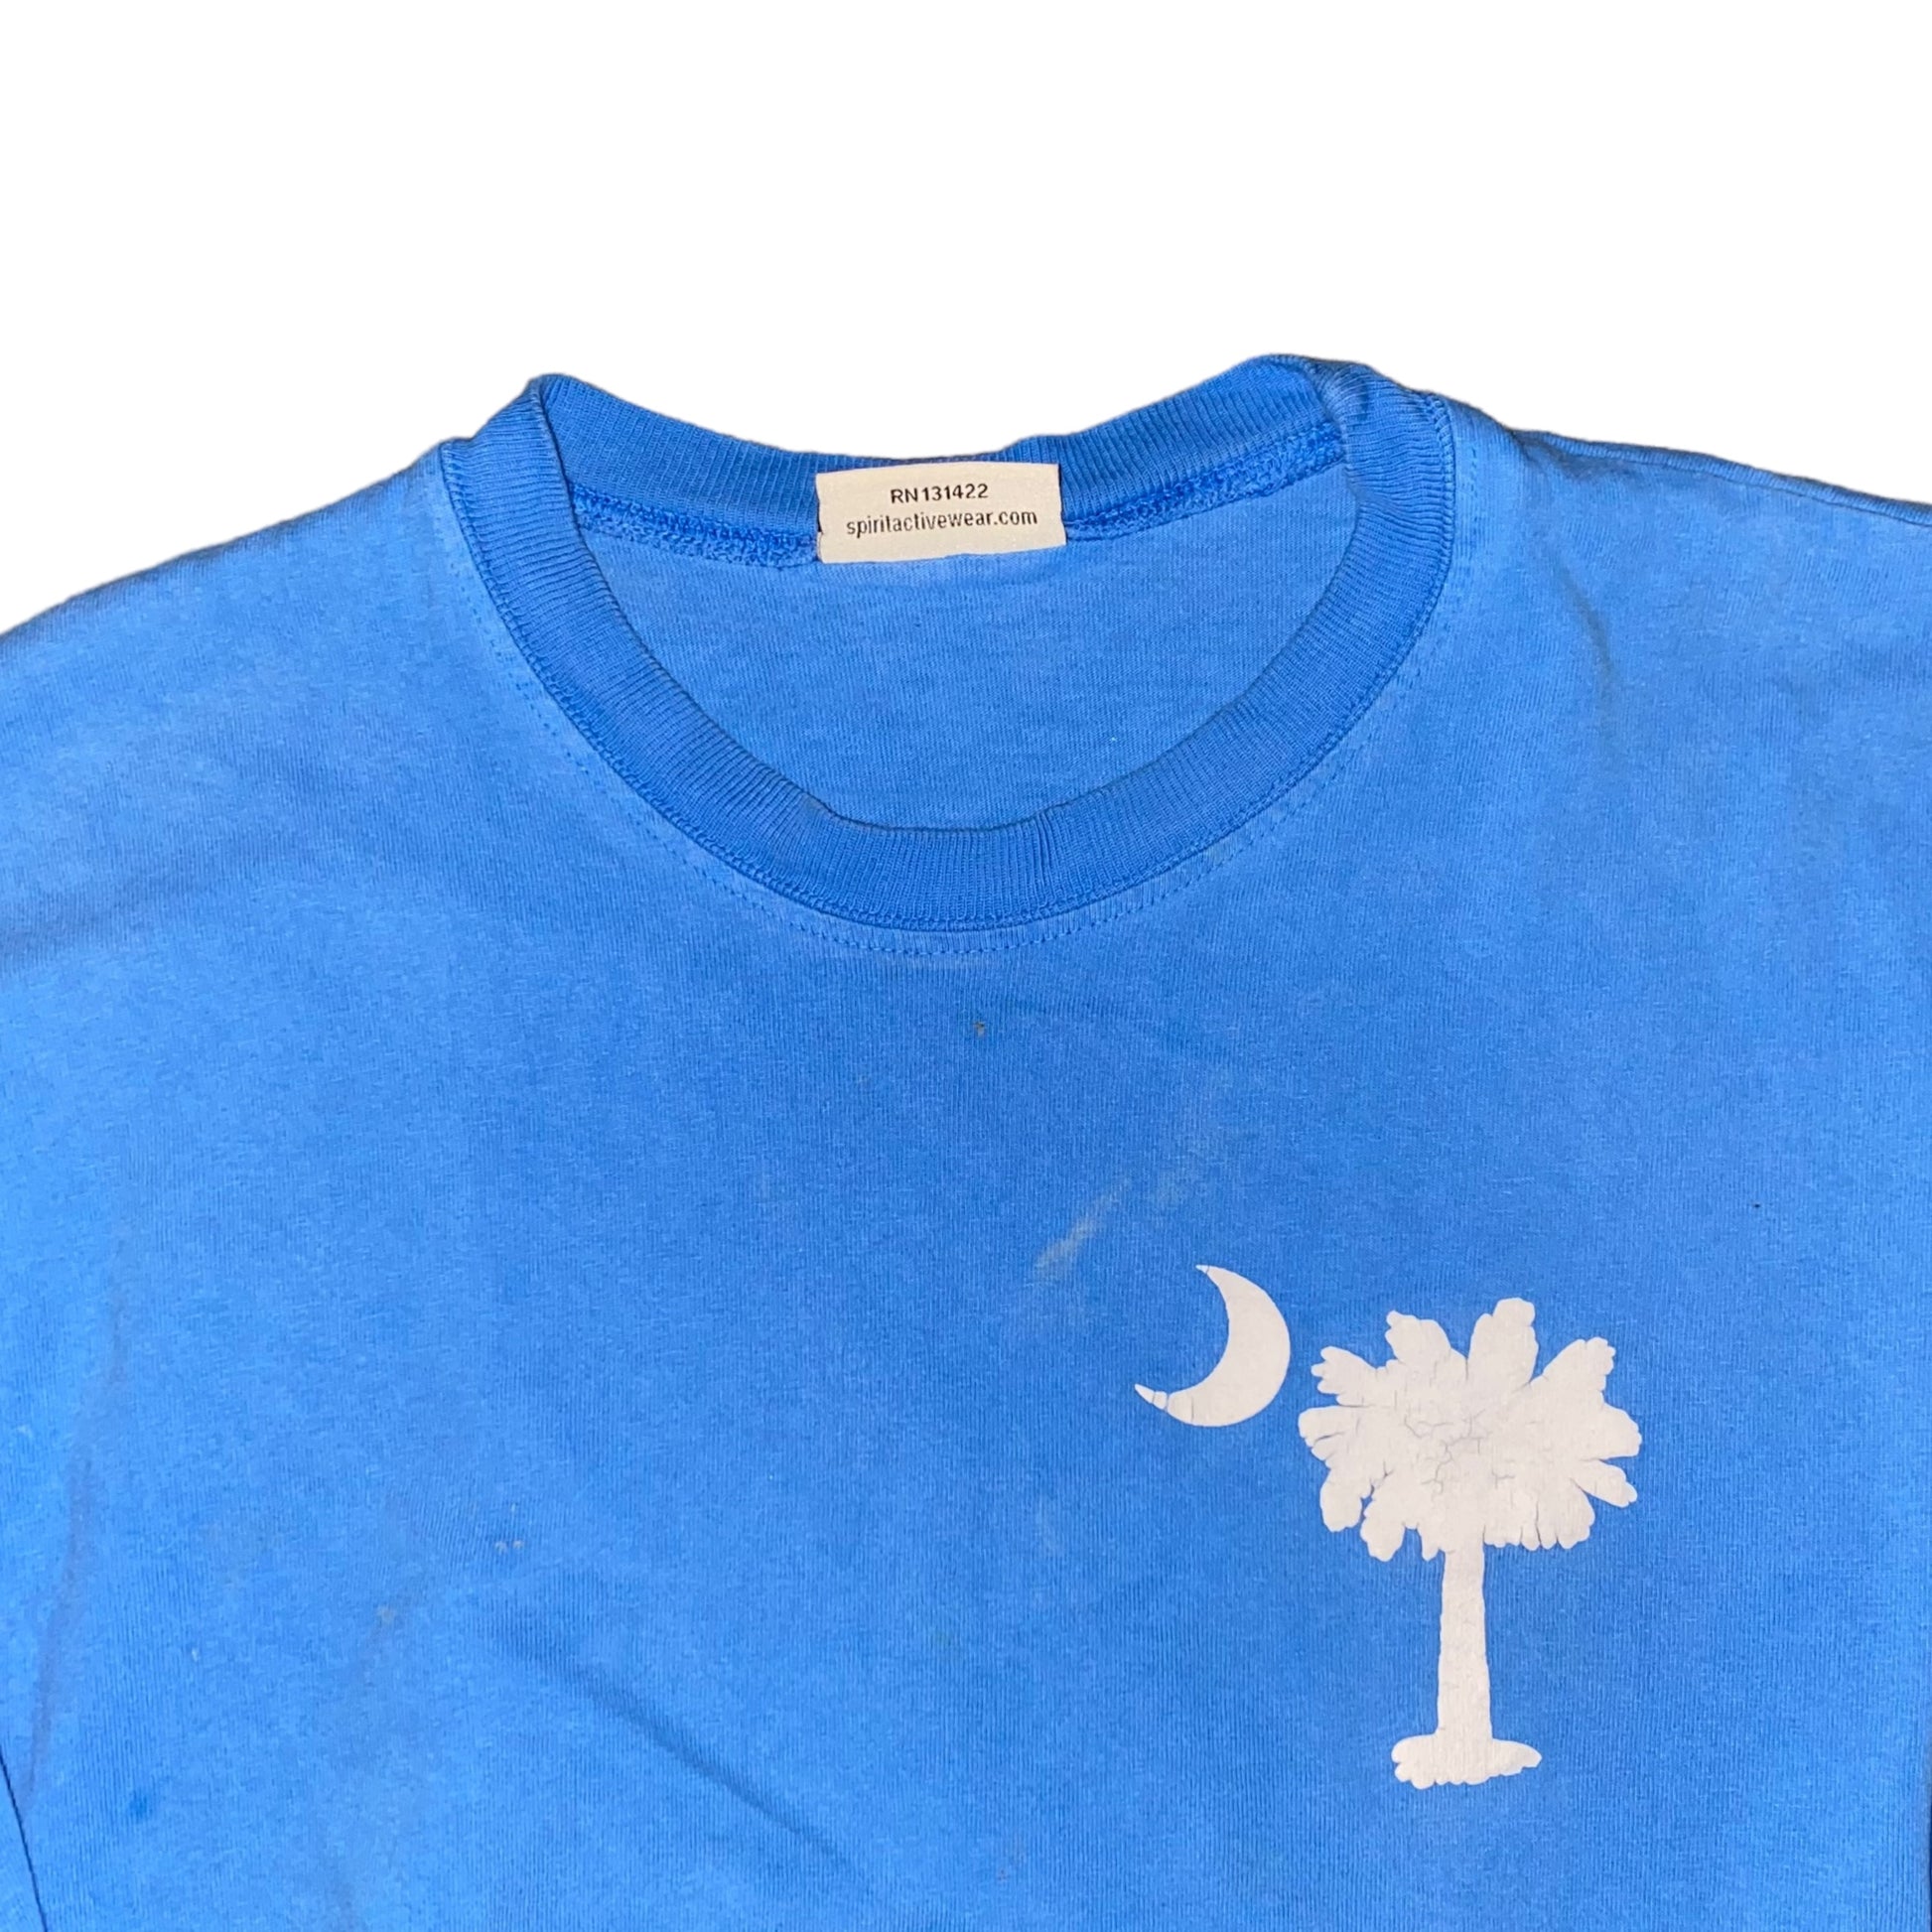 SPIRIT Activewear Vintage_Jumper blue moon palm tree logo design